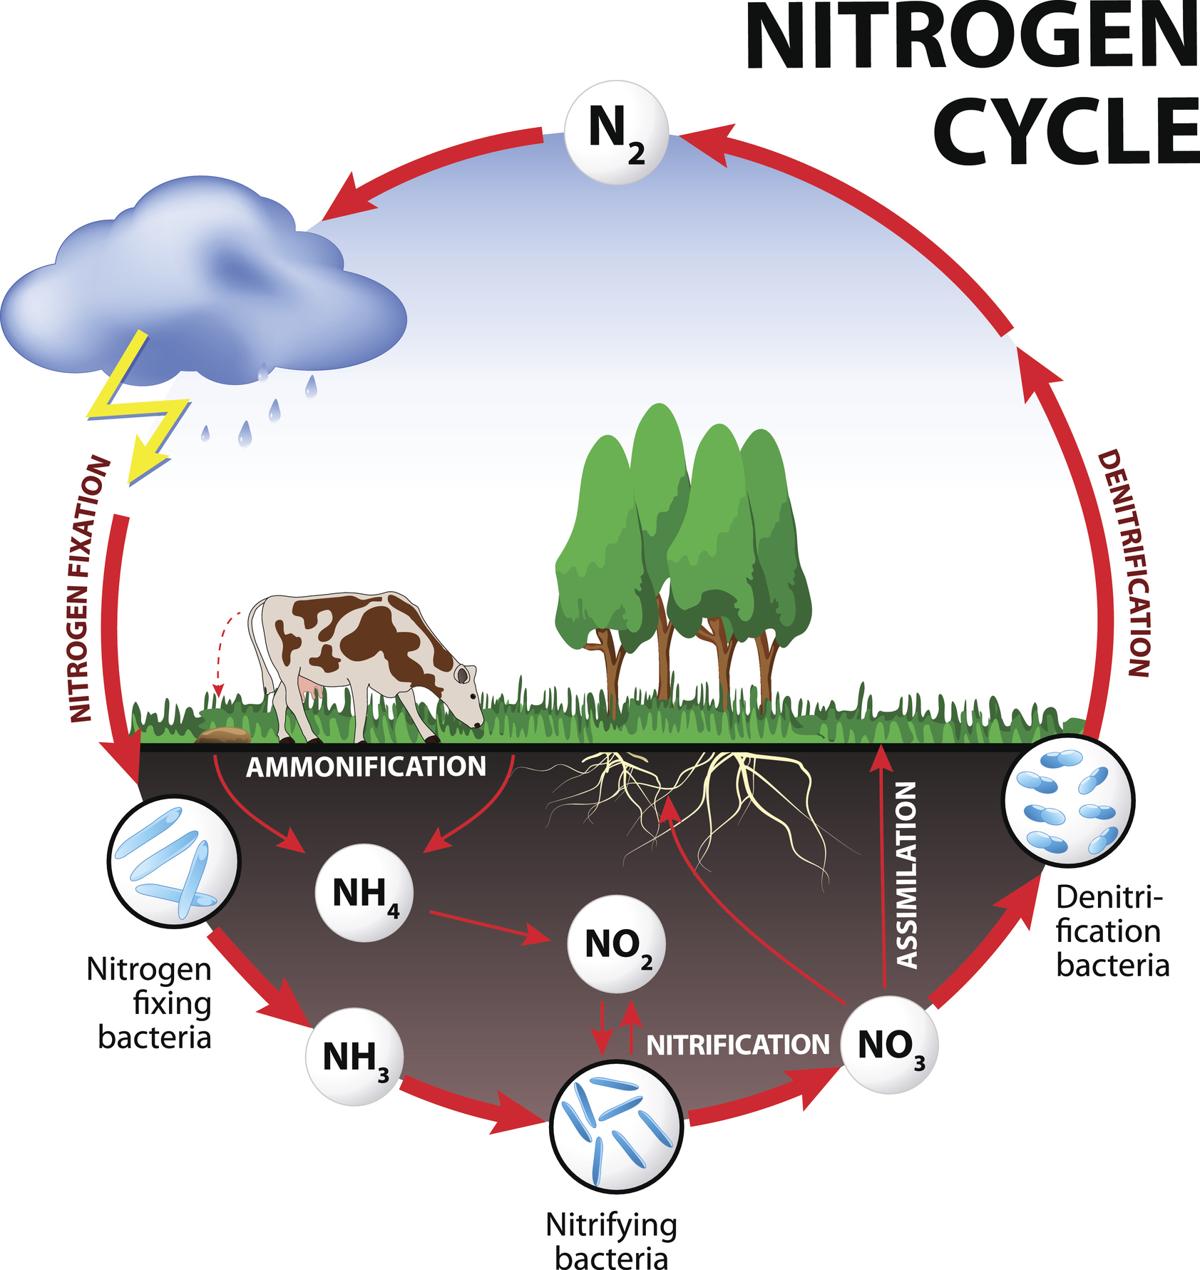 prentice hall biology nitrogen cycle